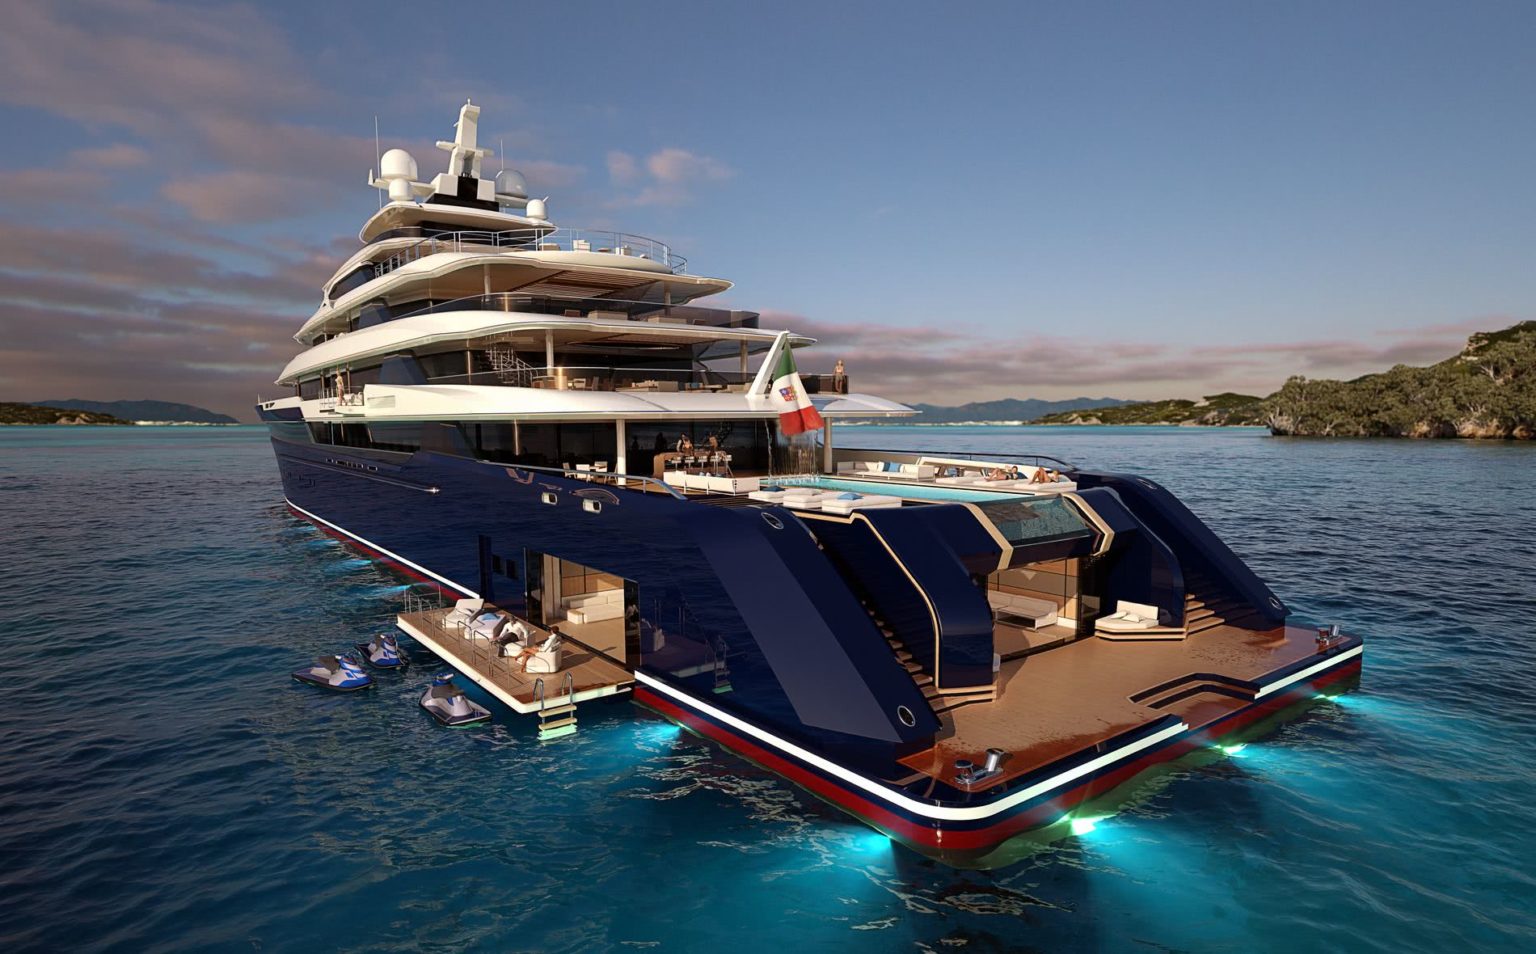 Columbus Classic 120m Motor Yacht a Hydrotec Design